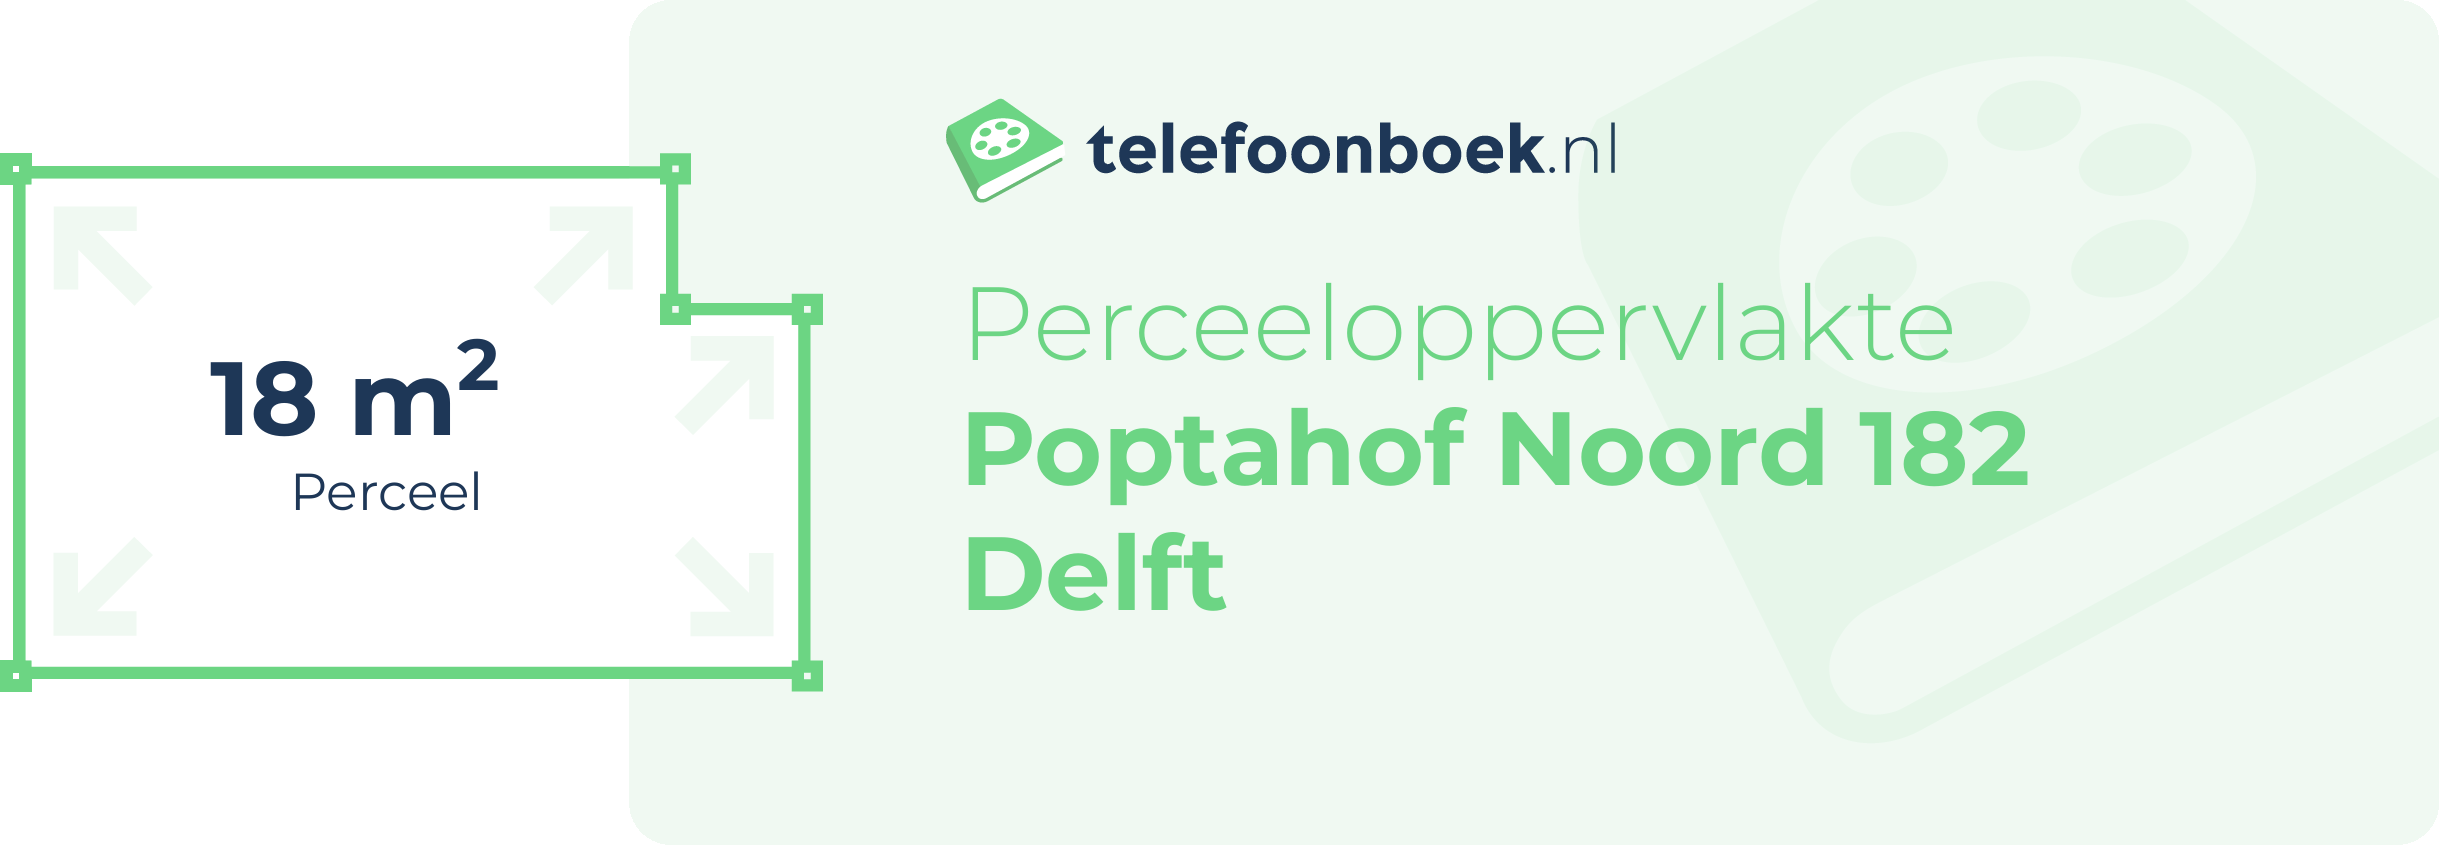 Perceeloppervlakte Poptahof Noord 182 Delft